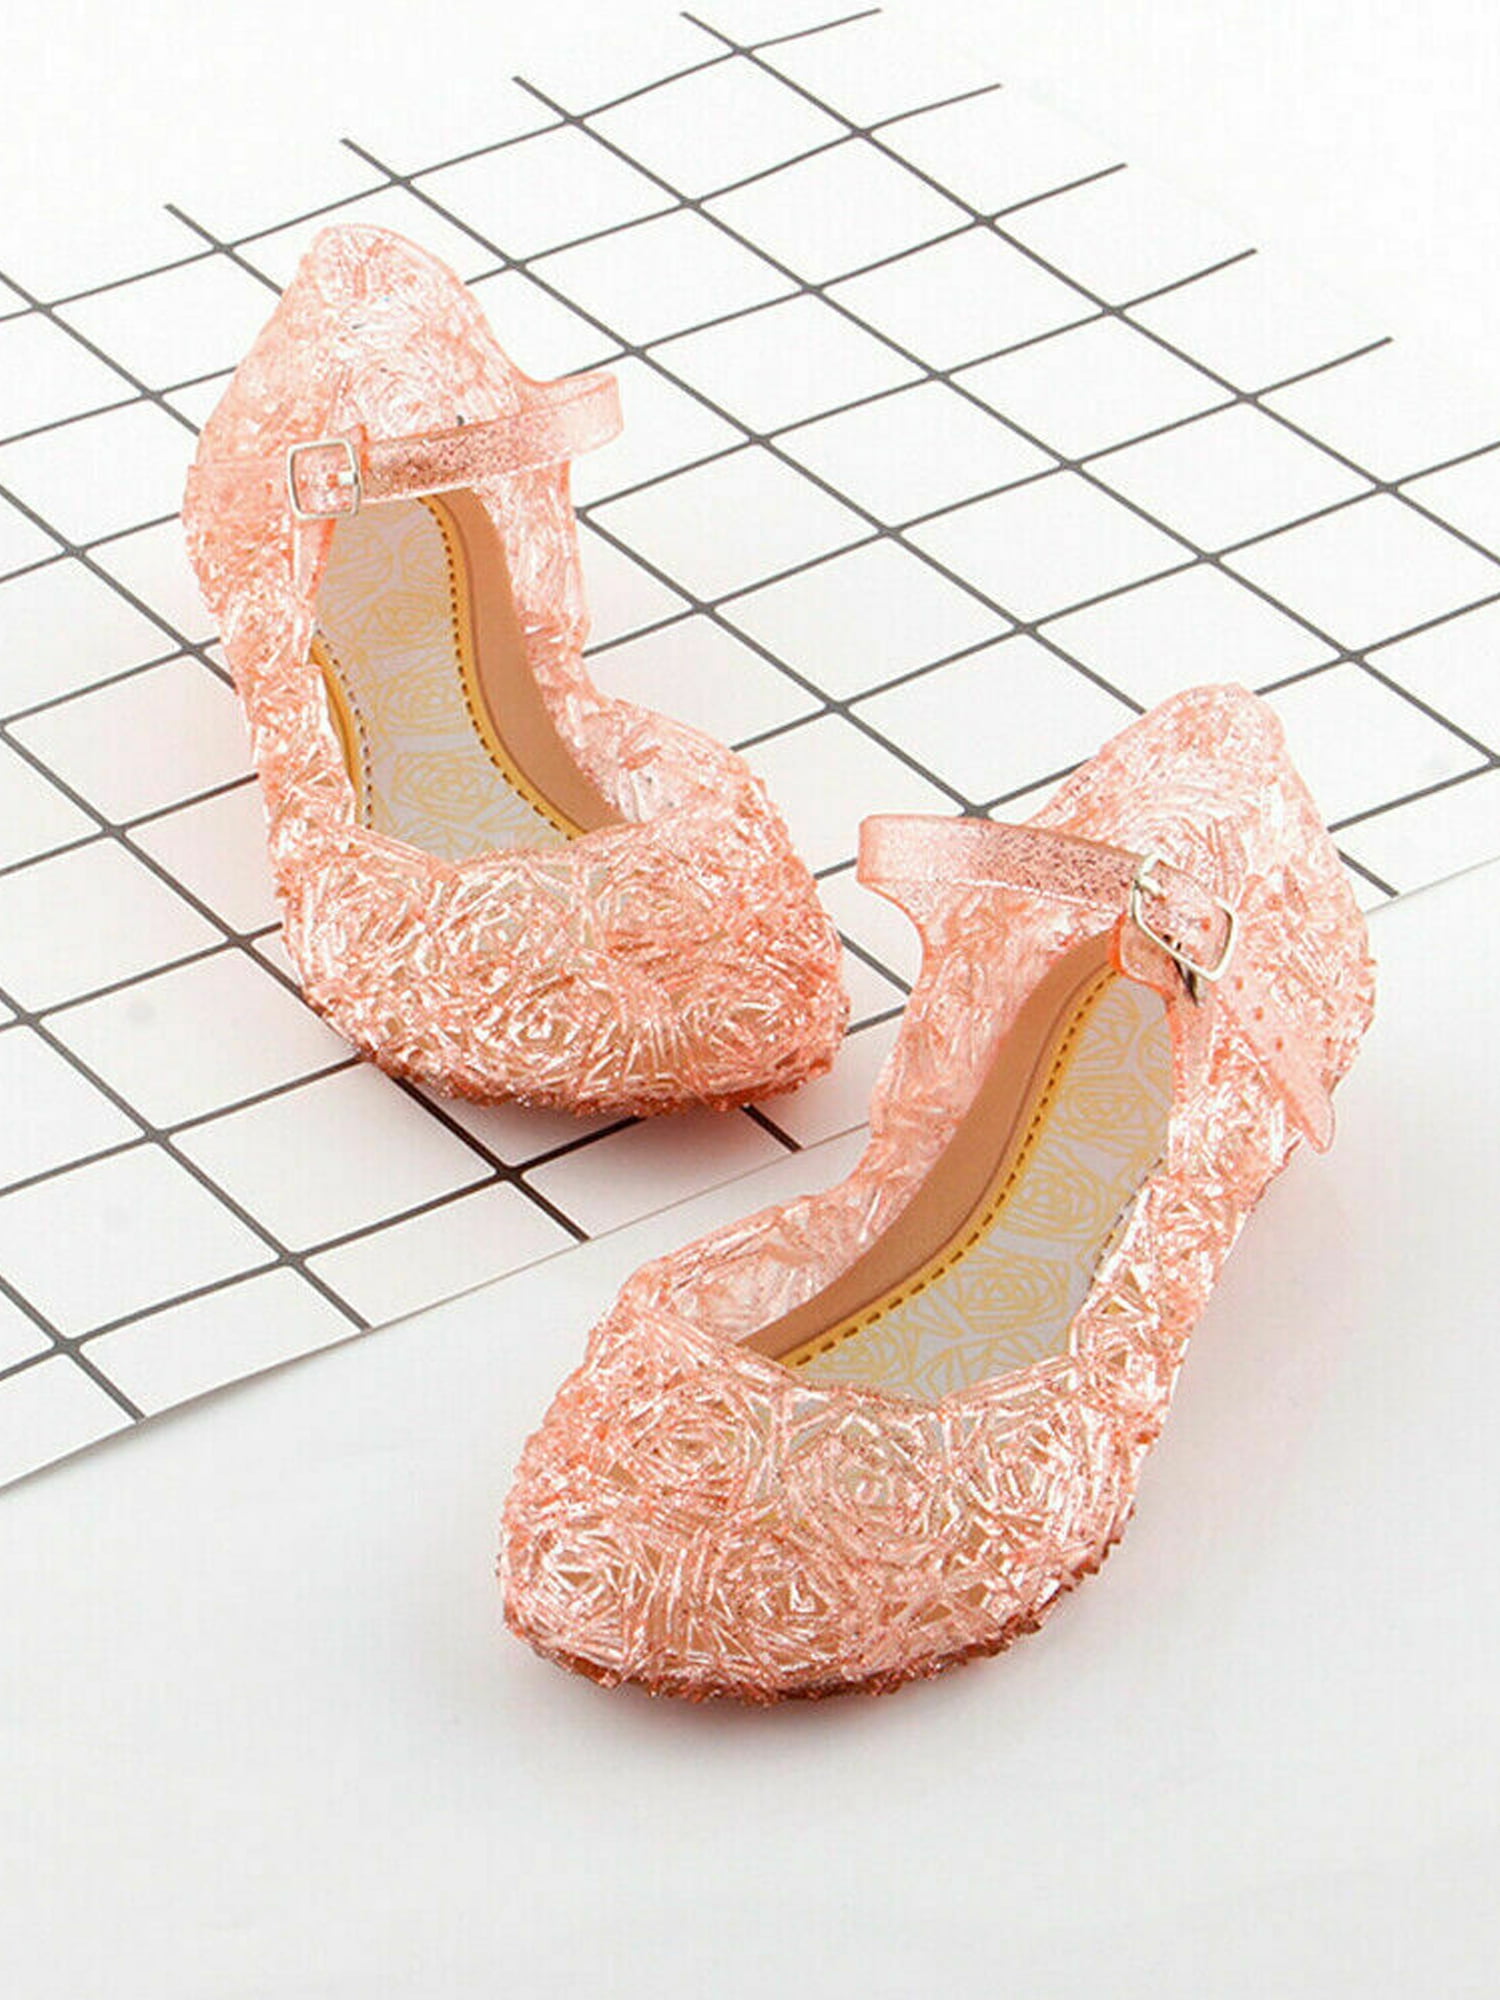 Girls Kids Sandals Jelly Shoes Princess Elsa Cosplay Fancy Dress Up Wedding Size